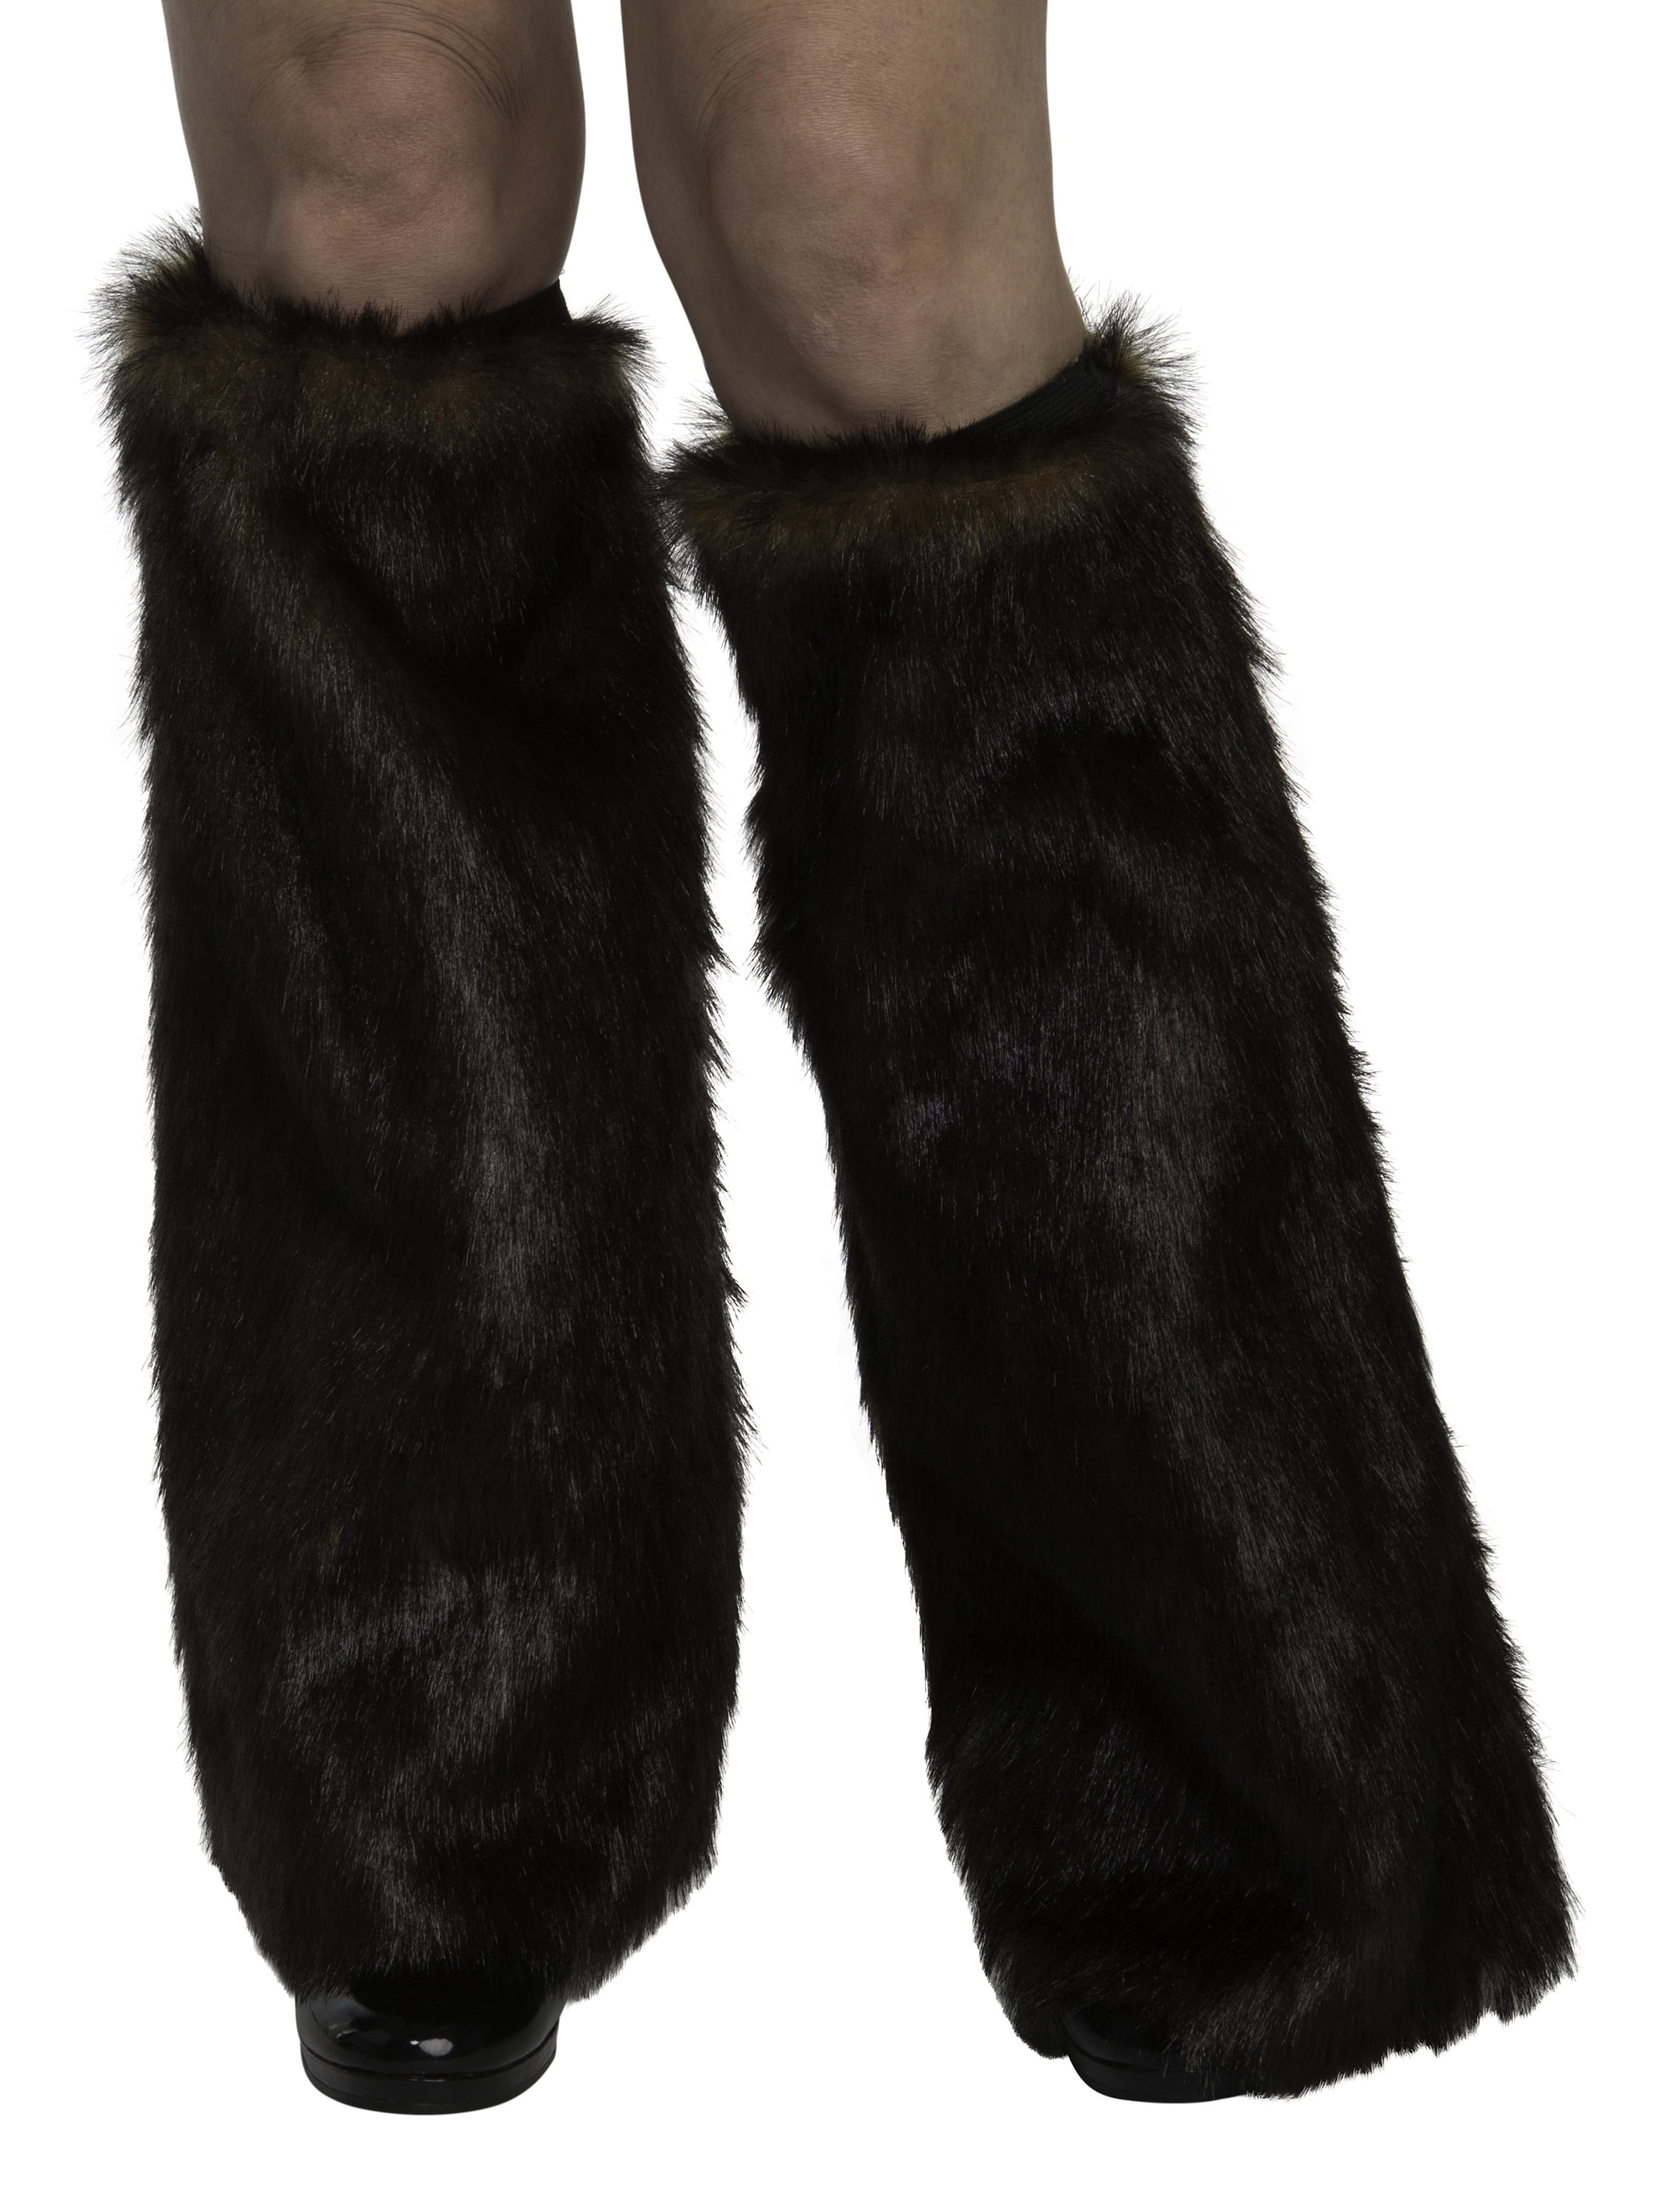 Yelete Solid Black Half-Size Comfy Furry Leg Warmers